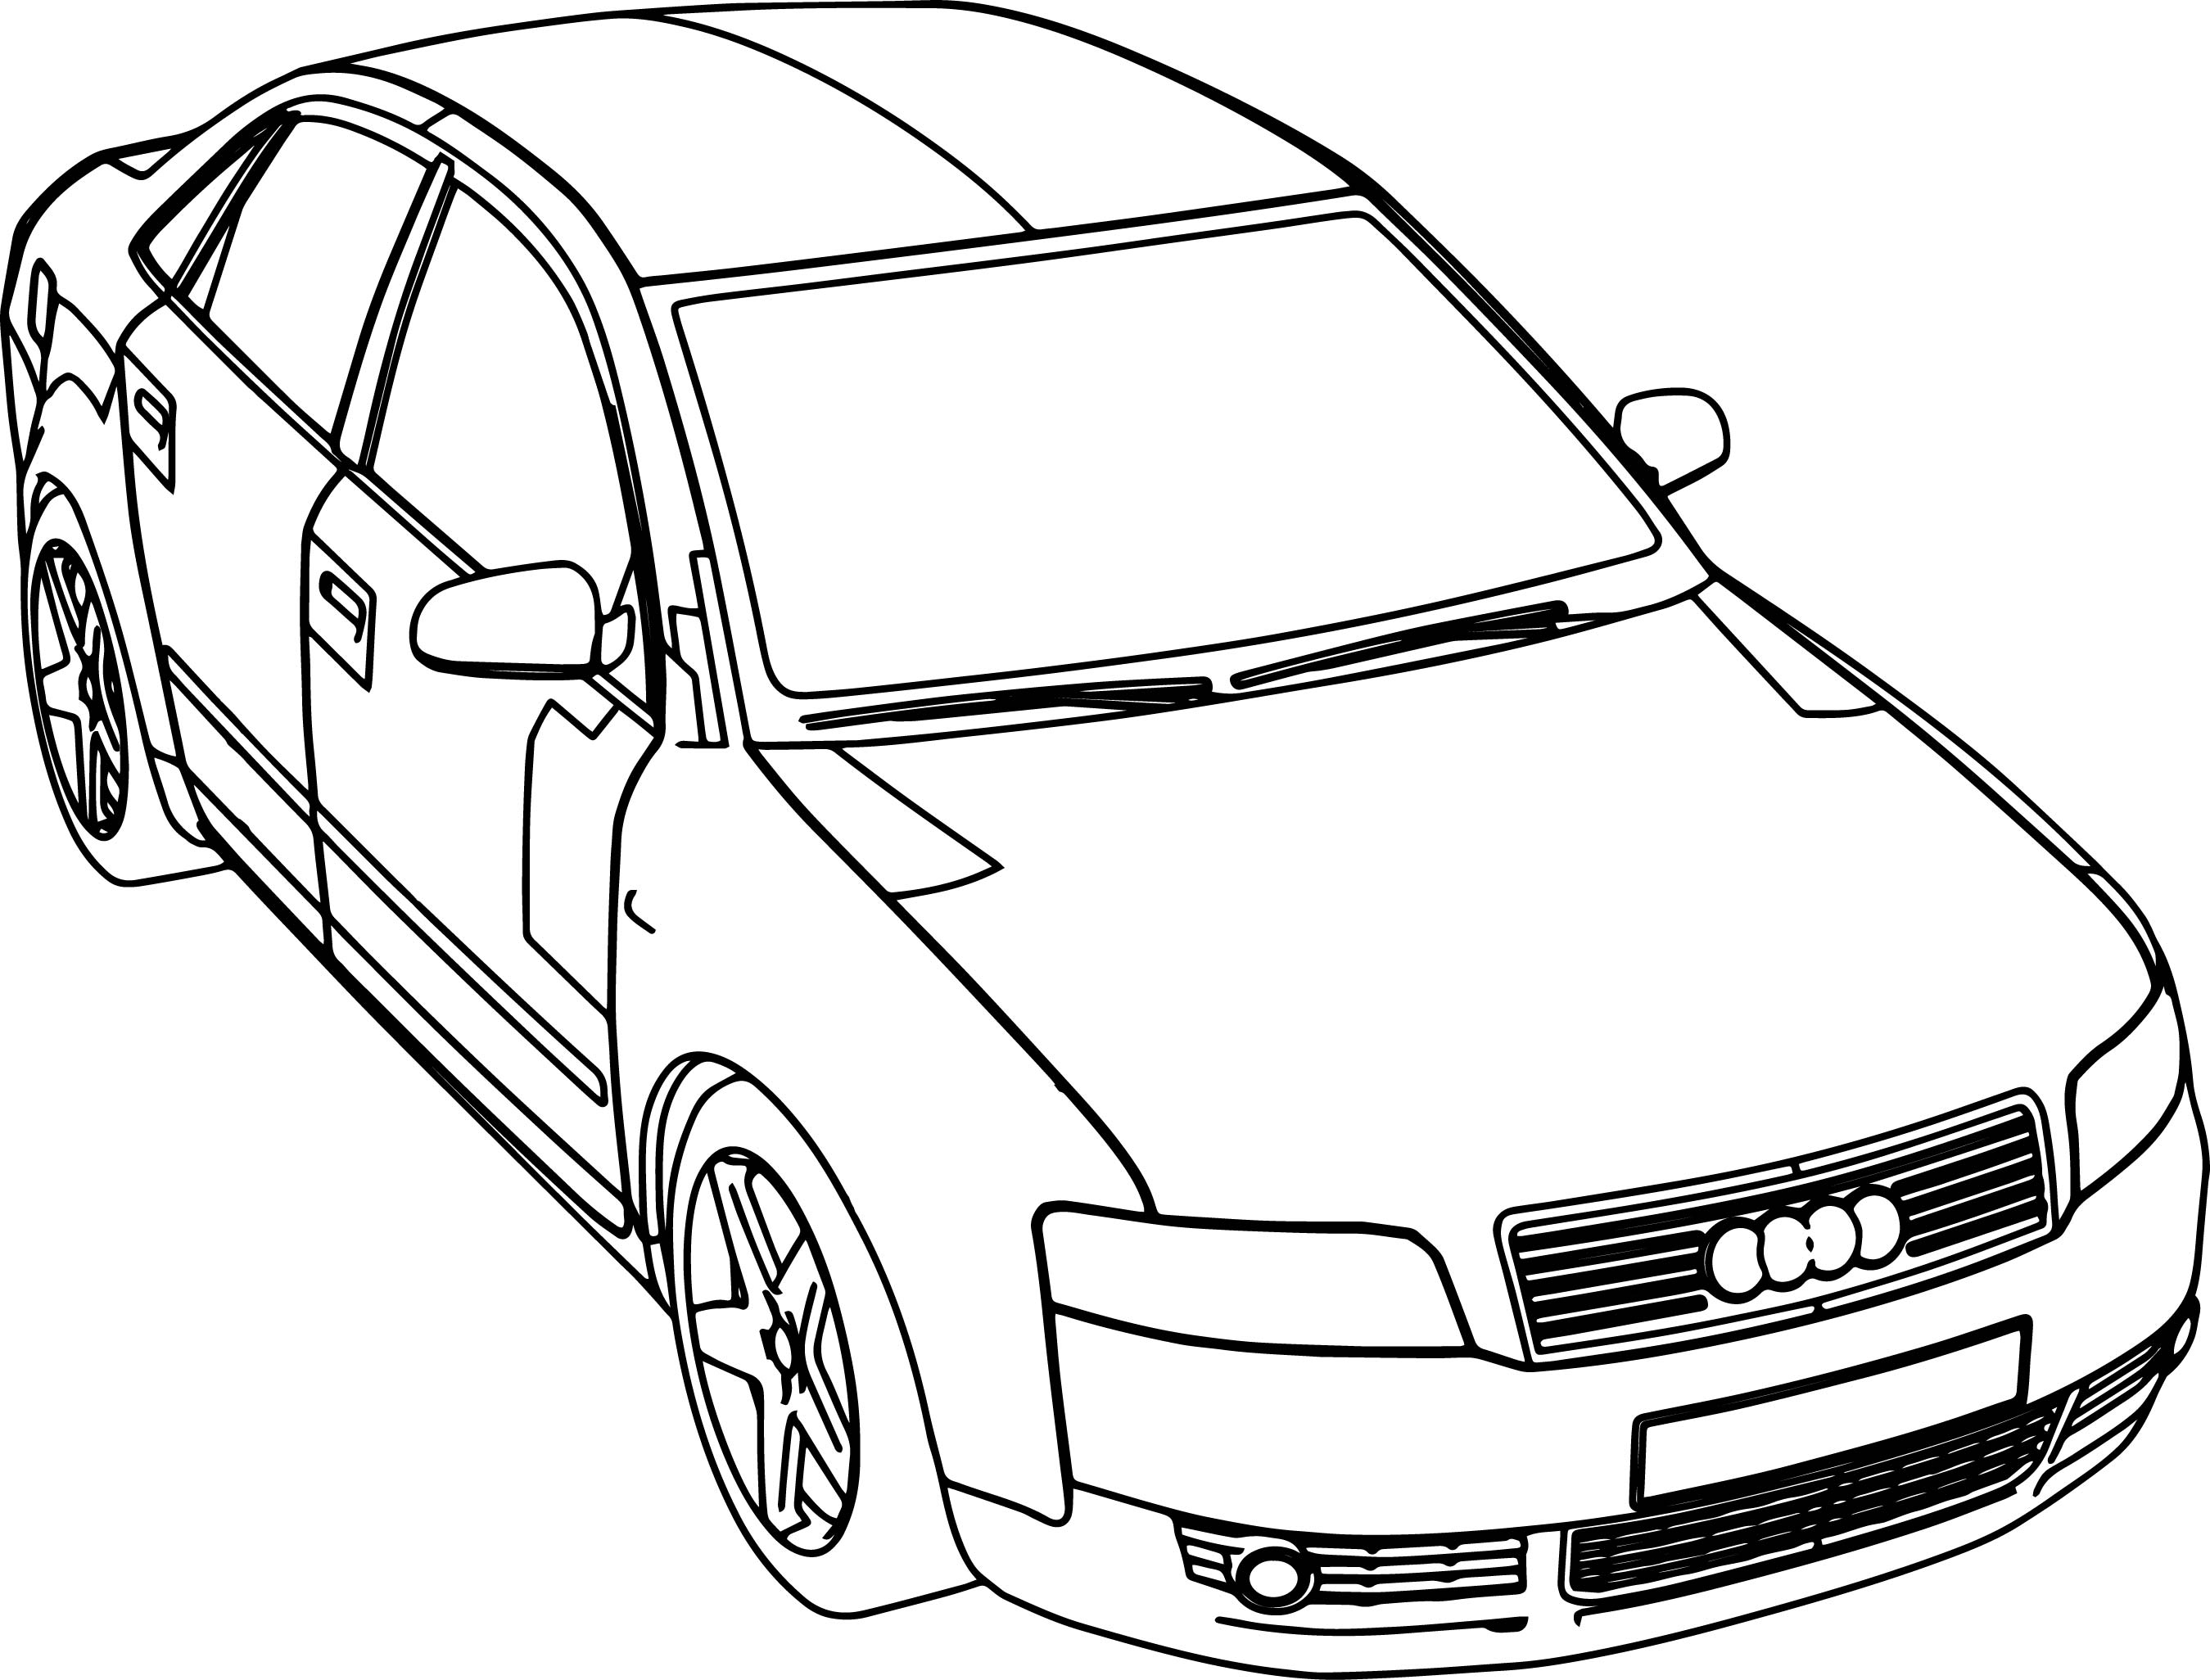 Audi R8 Coloring Pages at GetColorings.com | Free printable colorings